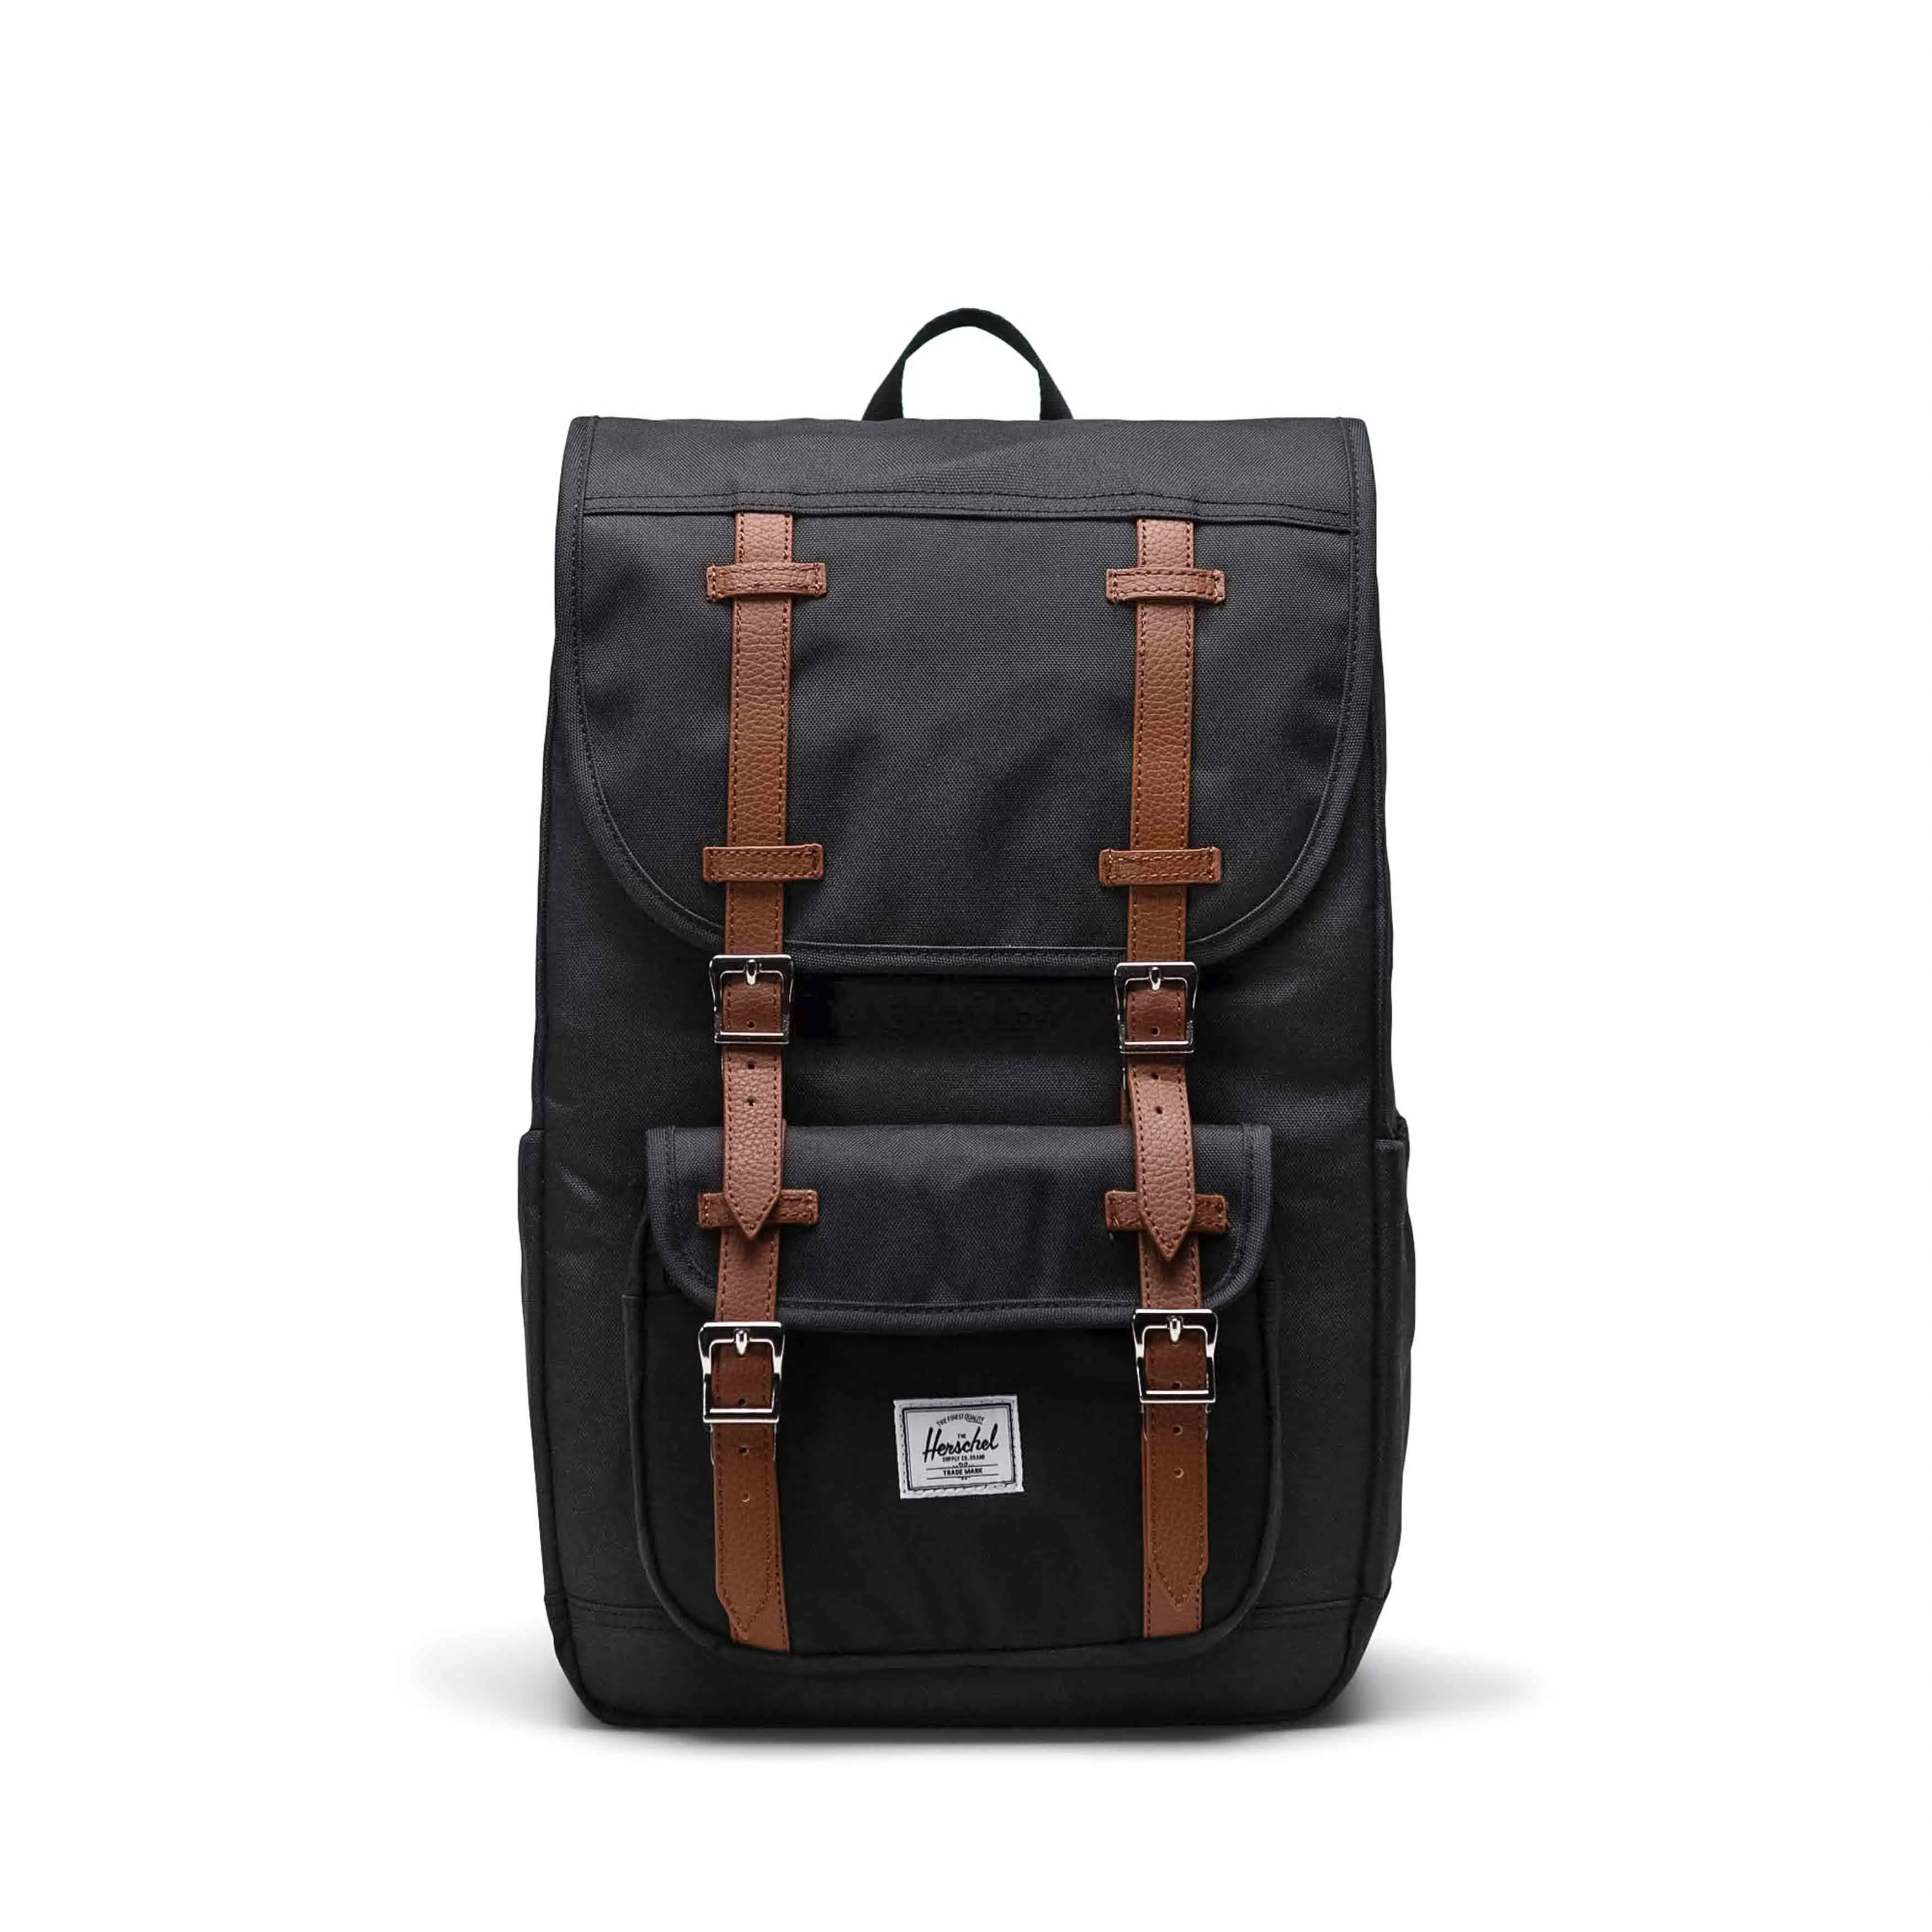 Image of a Herschel Little America Backpack in Black